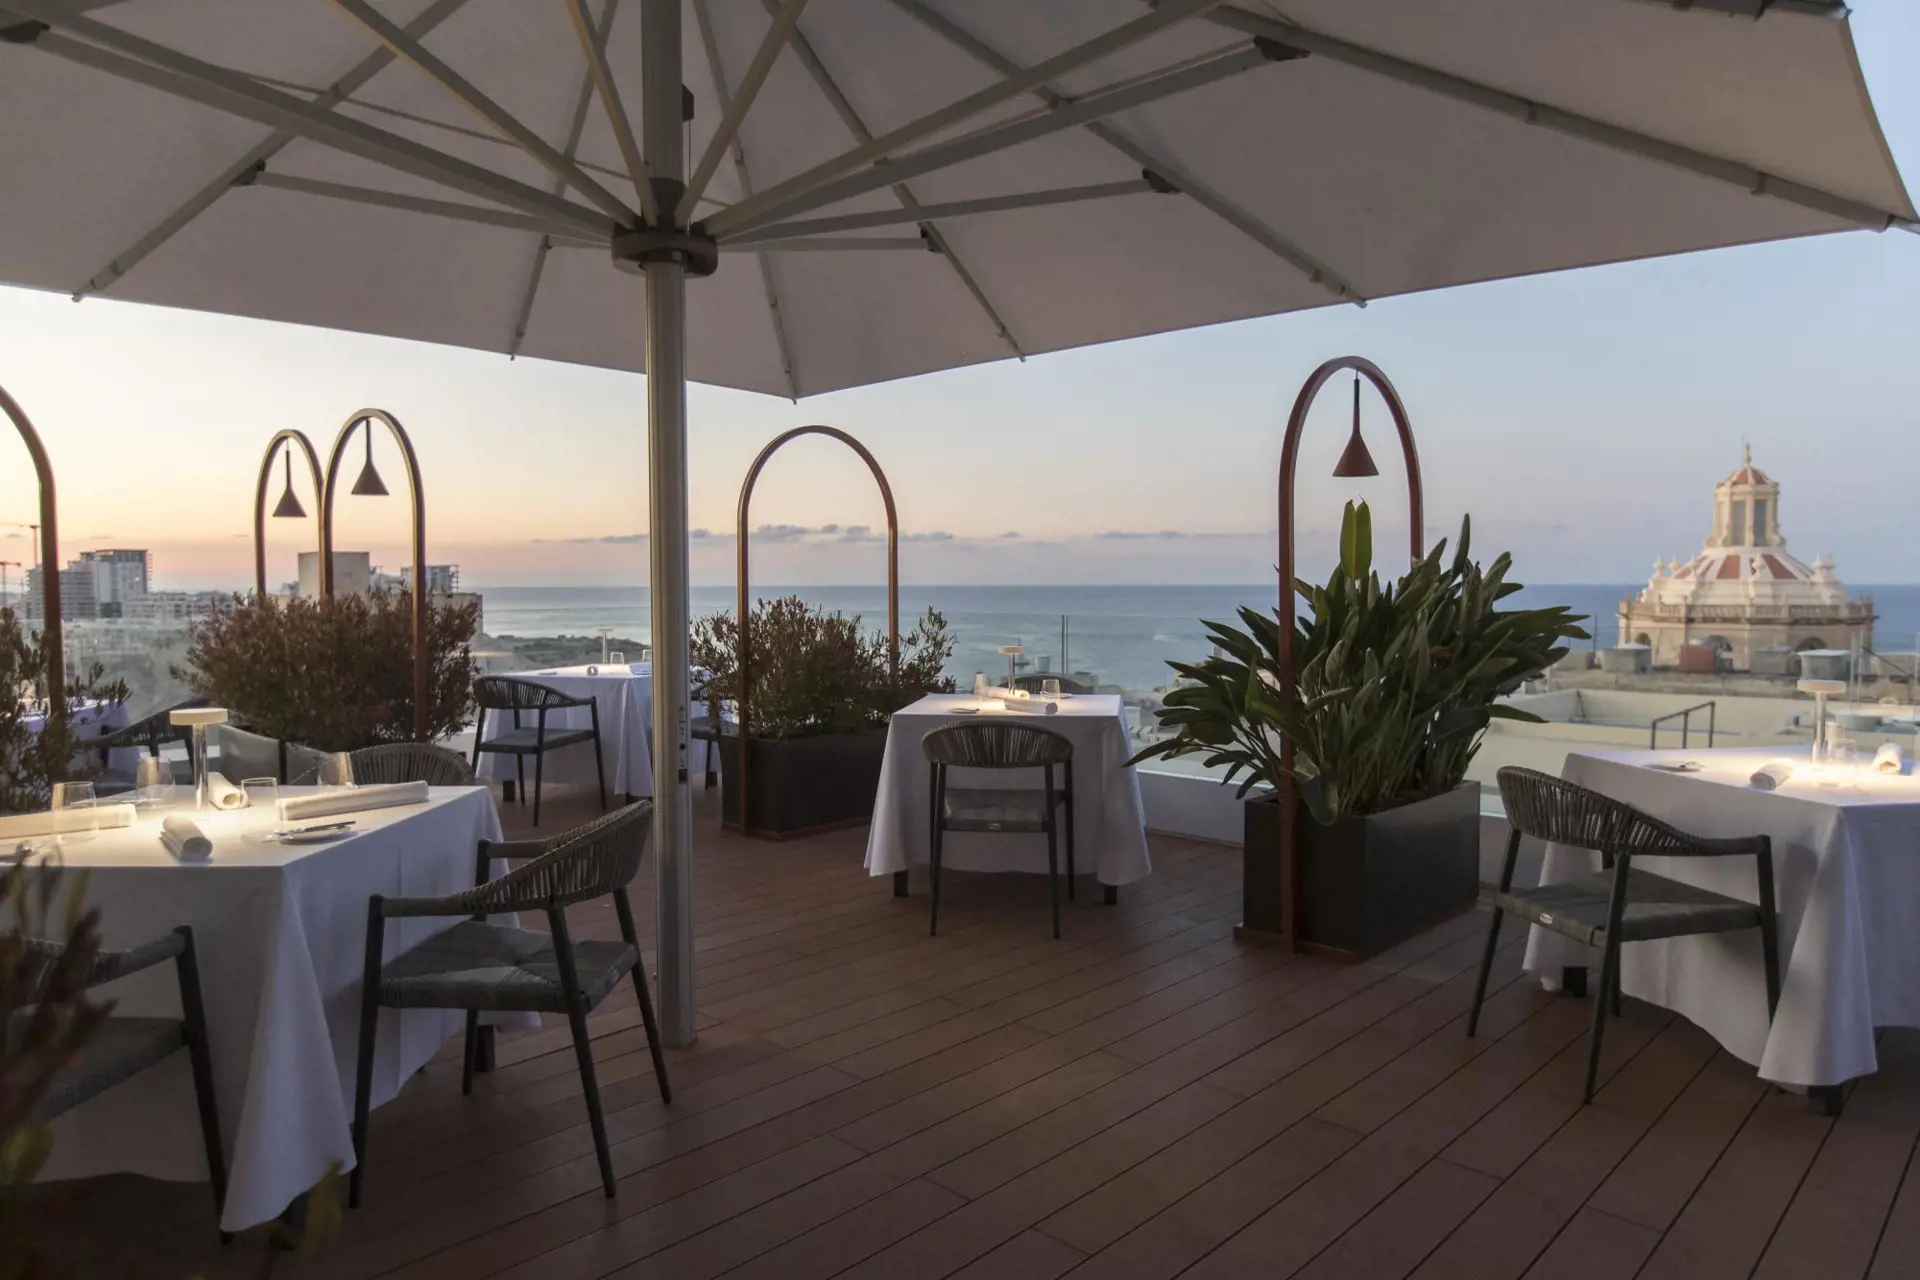 rosselli malta restaurant view